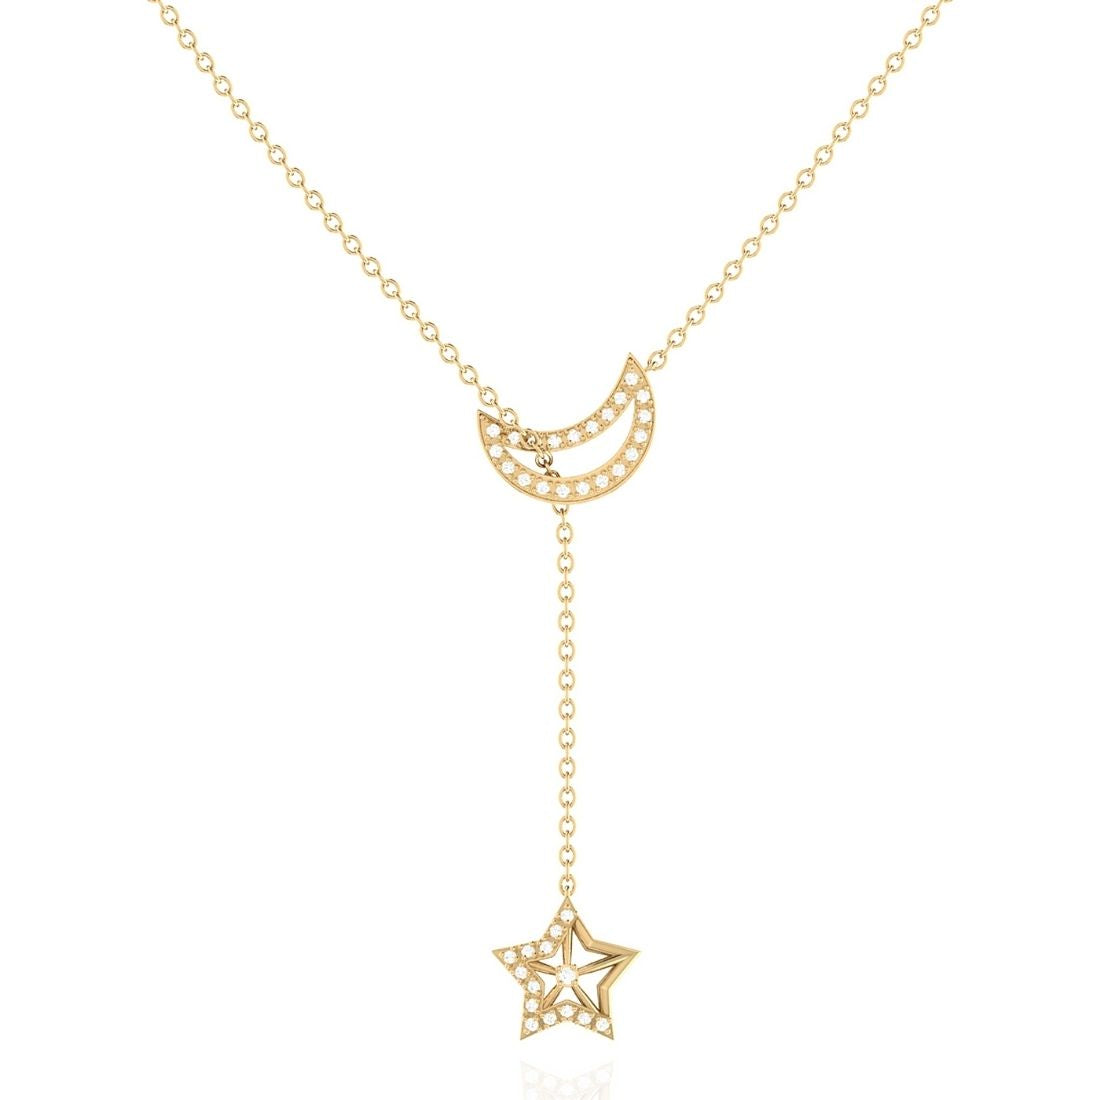 Shooting Star Crescent Moon Diamond Necklace on display